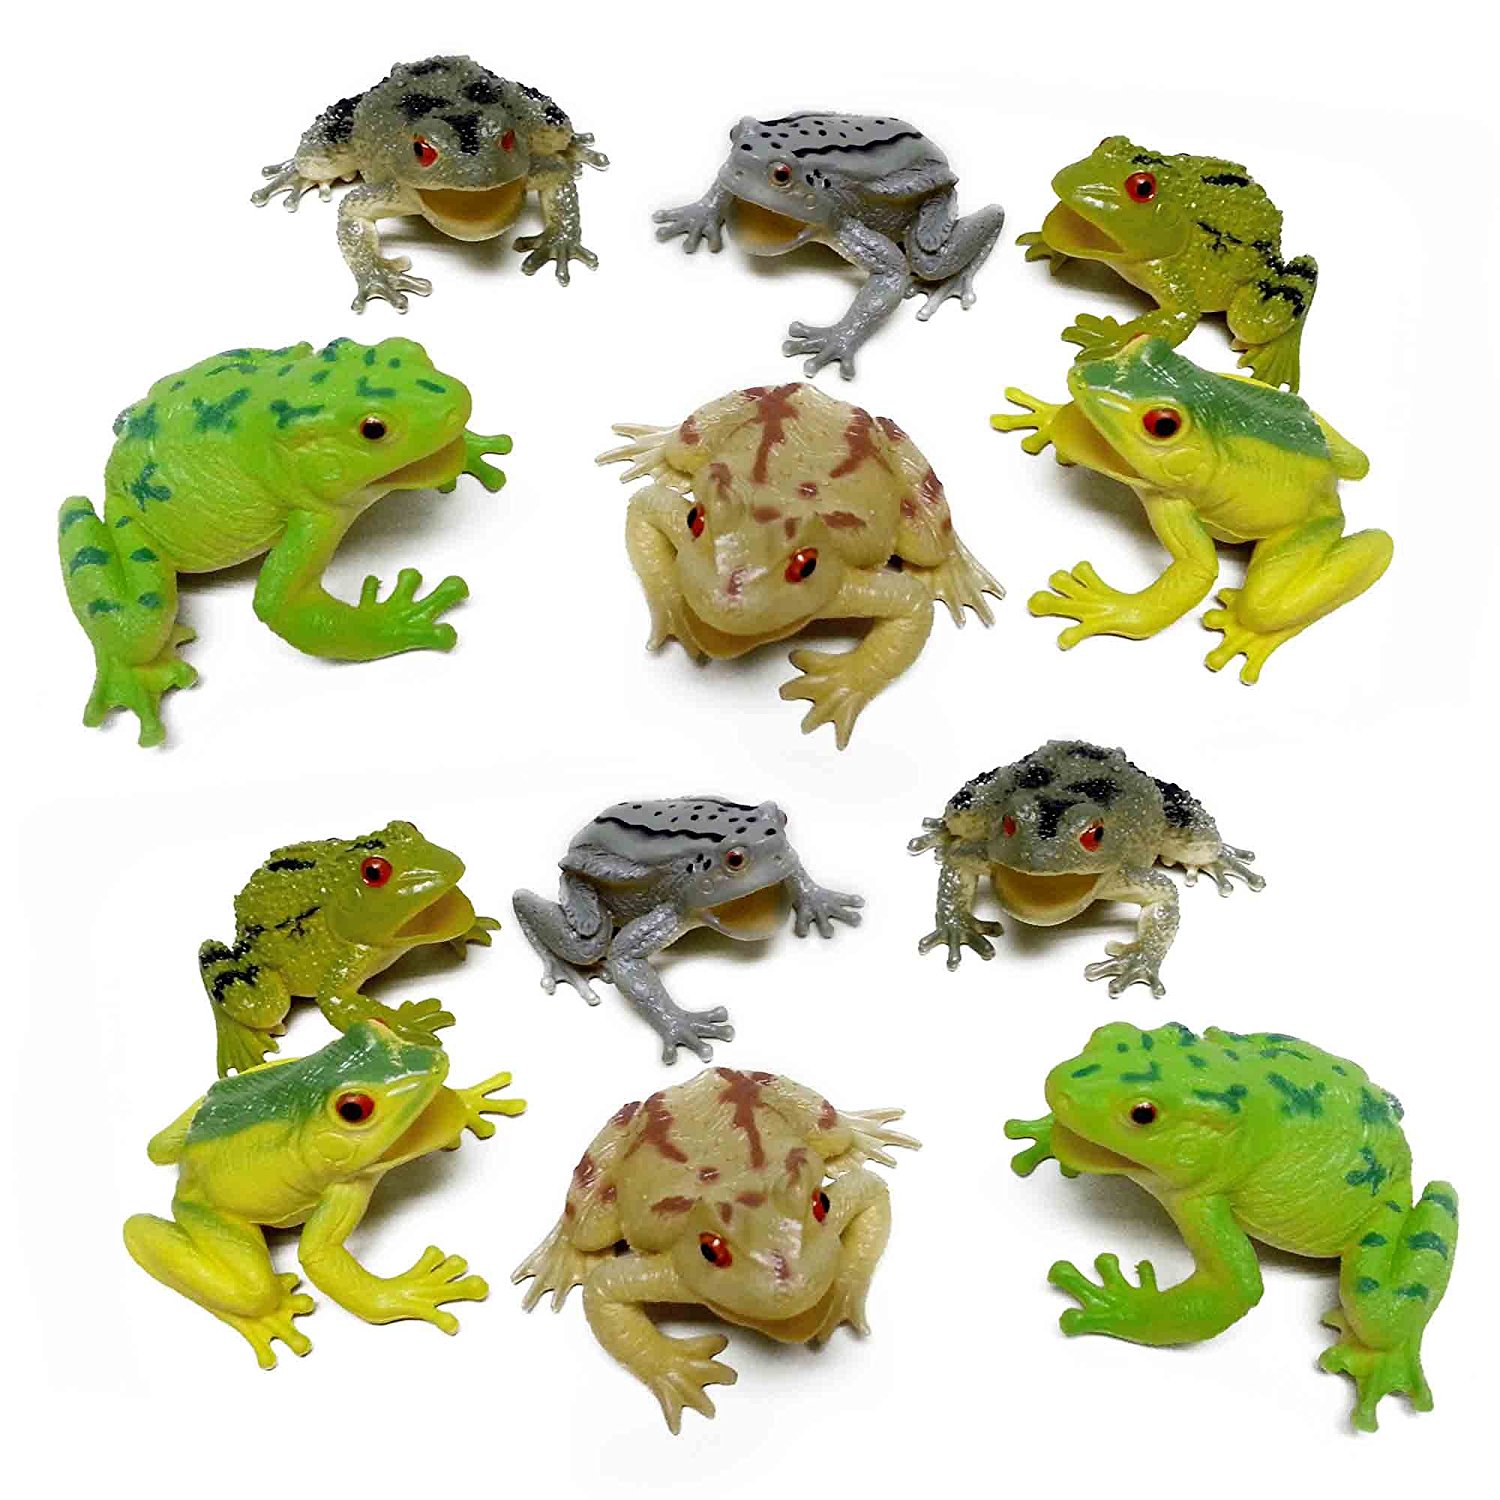 Amazon.com: Fun Central AZ916 12 pieces 3 Inch Toy Frogs Figure Fun ...